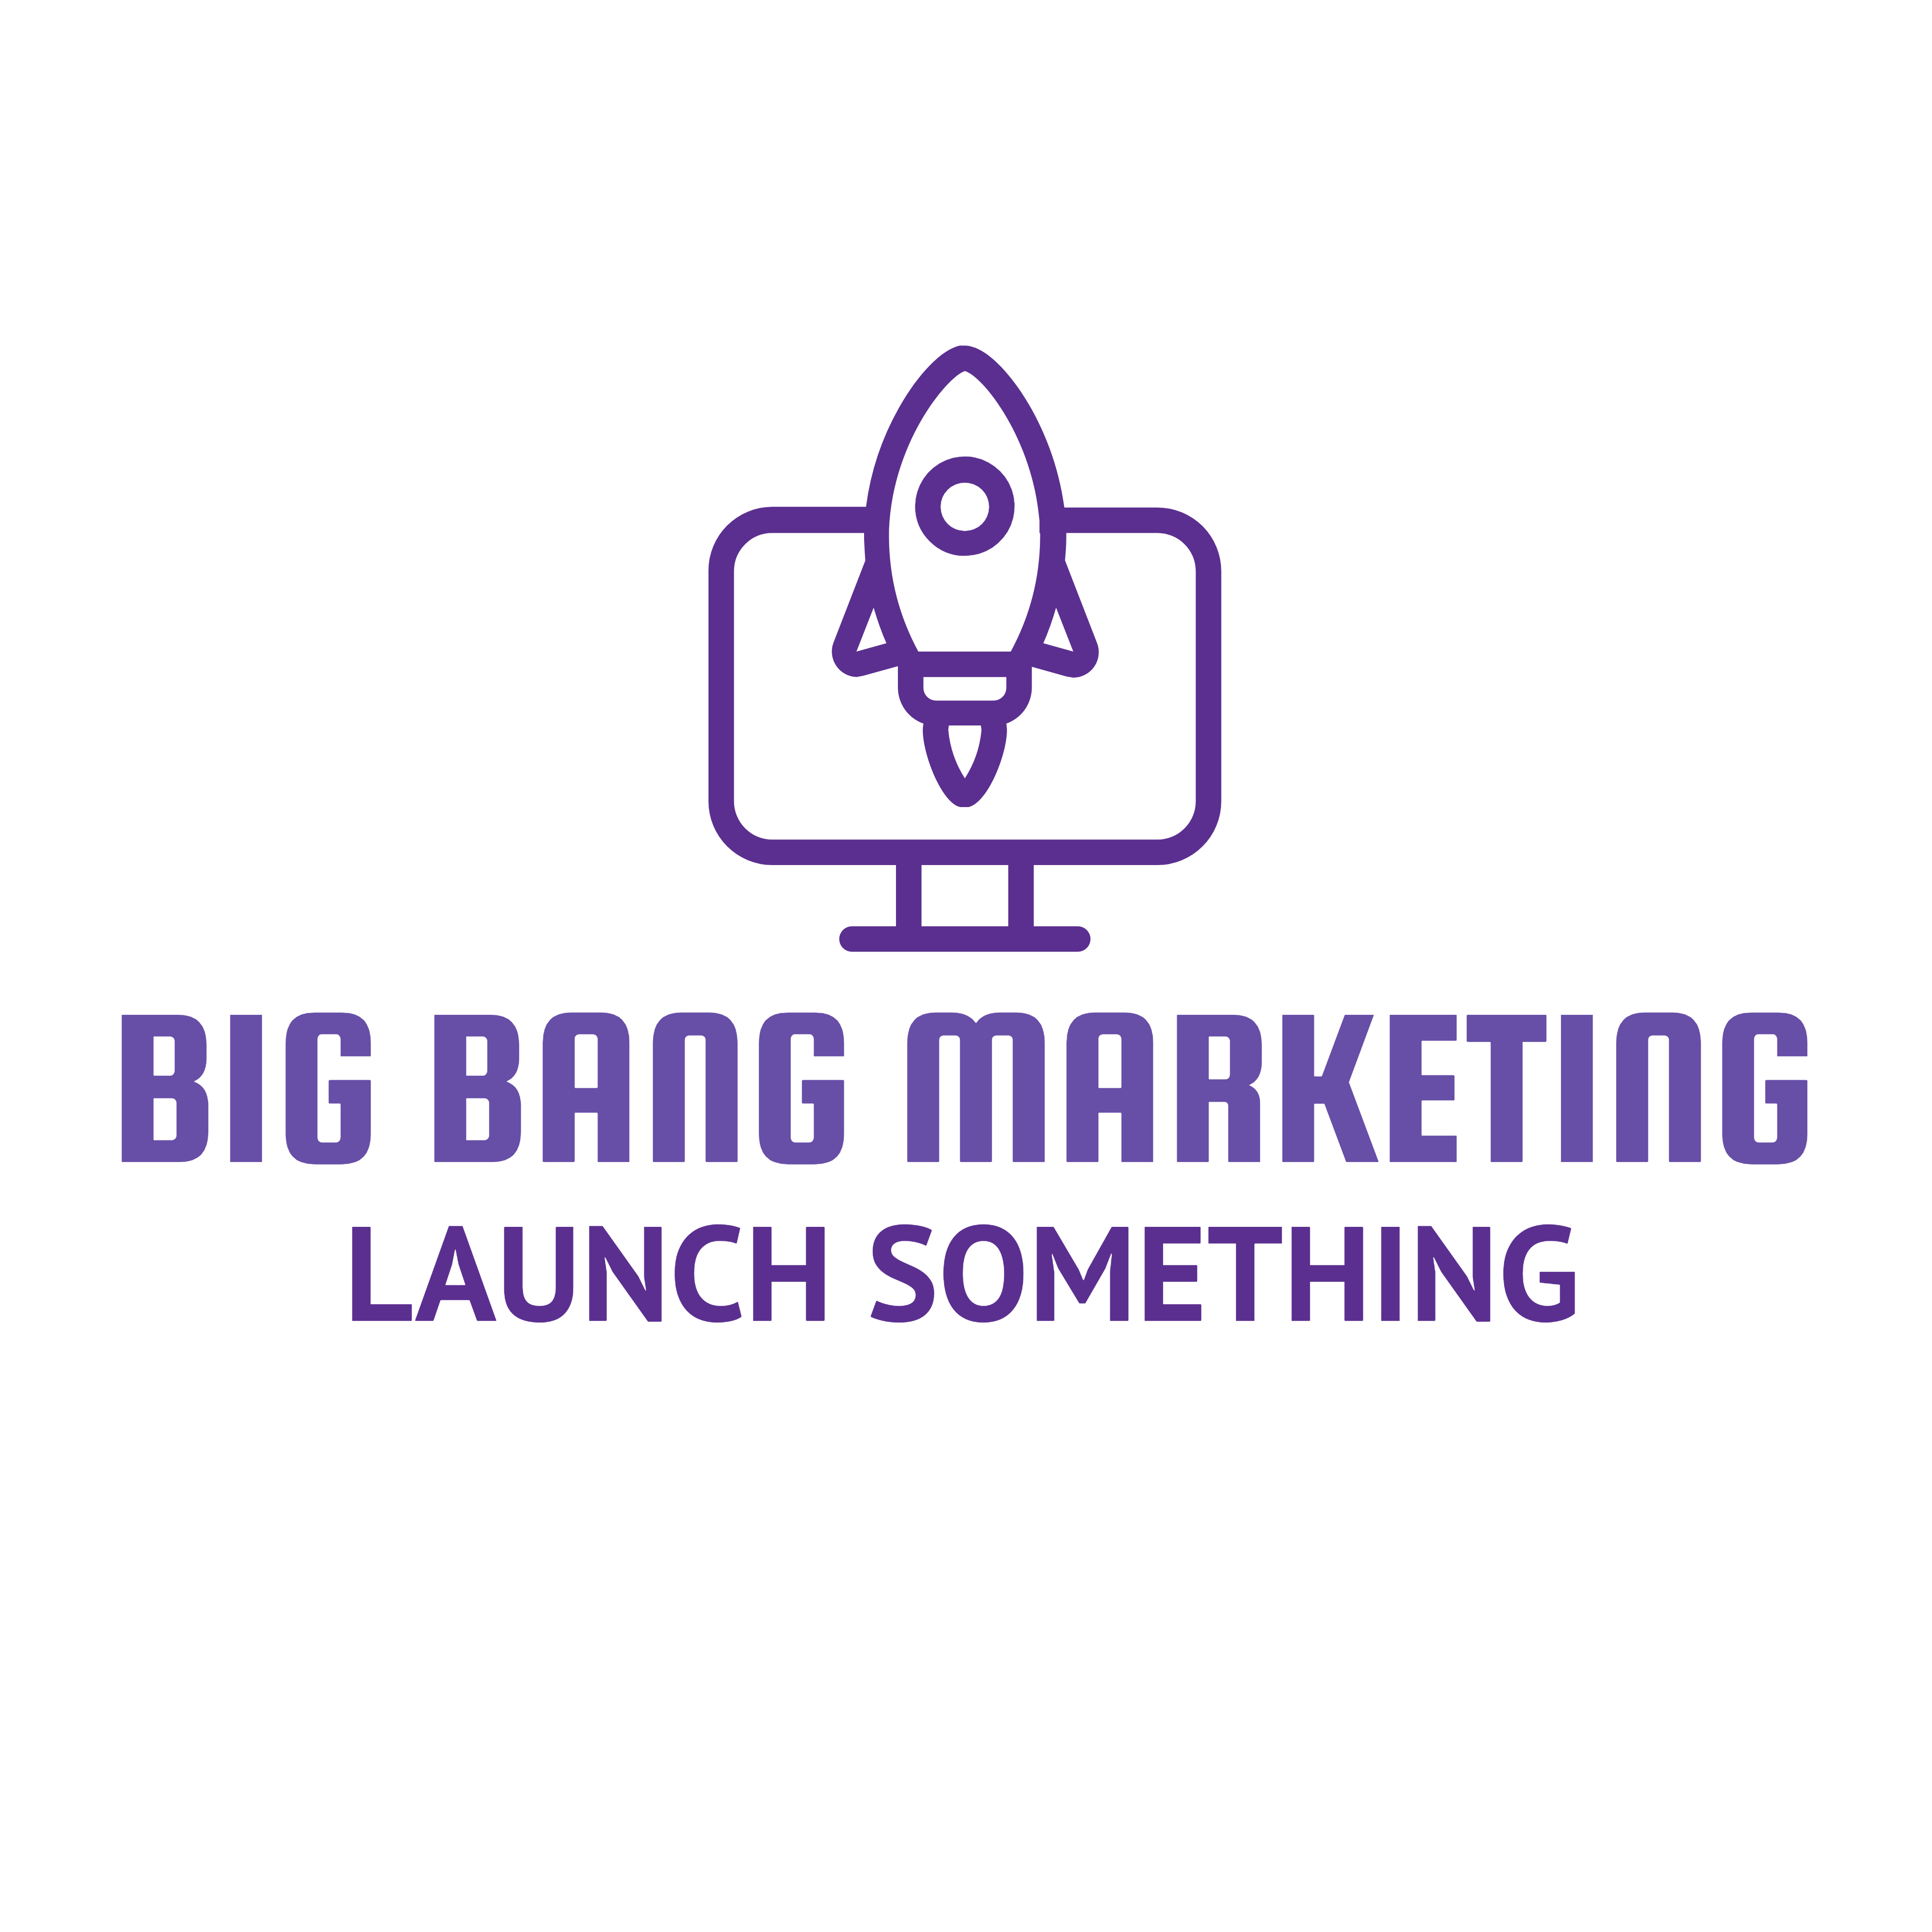 Top Search Engine Optimization Company Logo: Big Bang Marketing